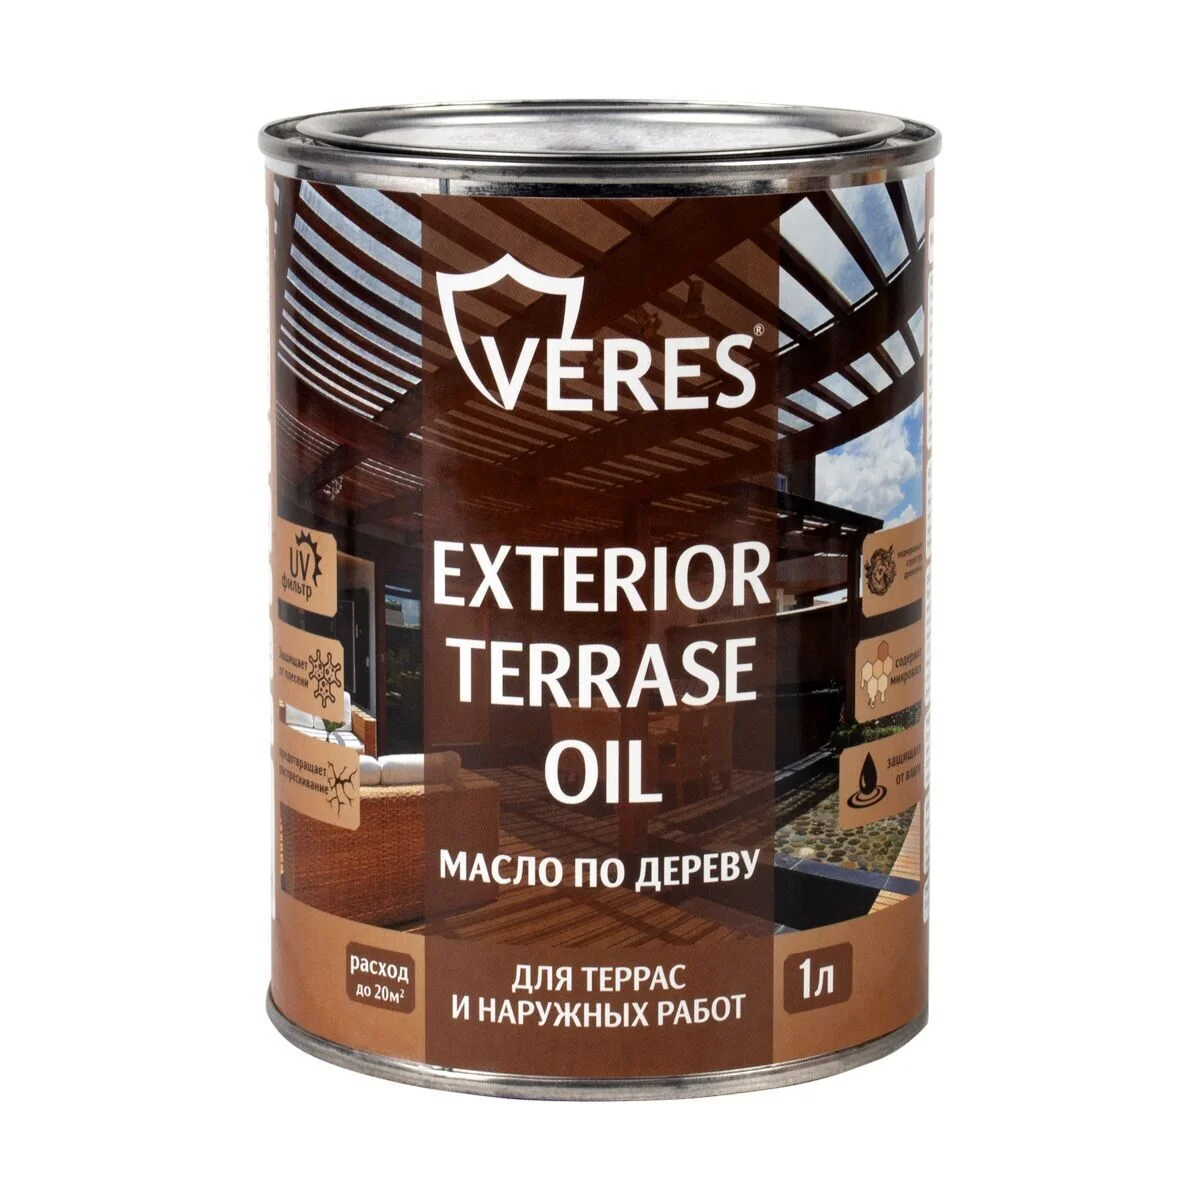 Масло для дерева Veres Exterior Terrase Oil, 1 л, палисандр